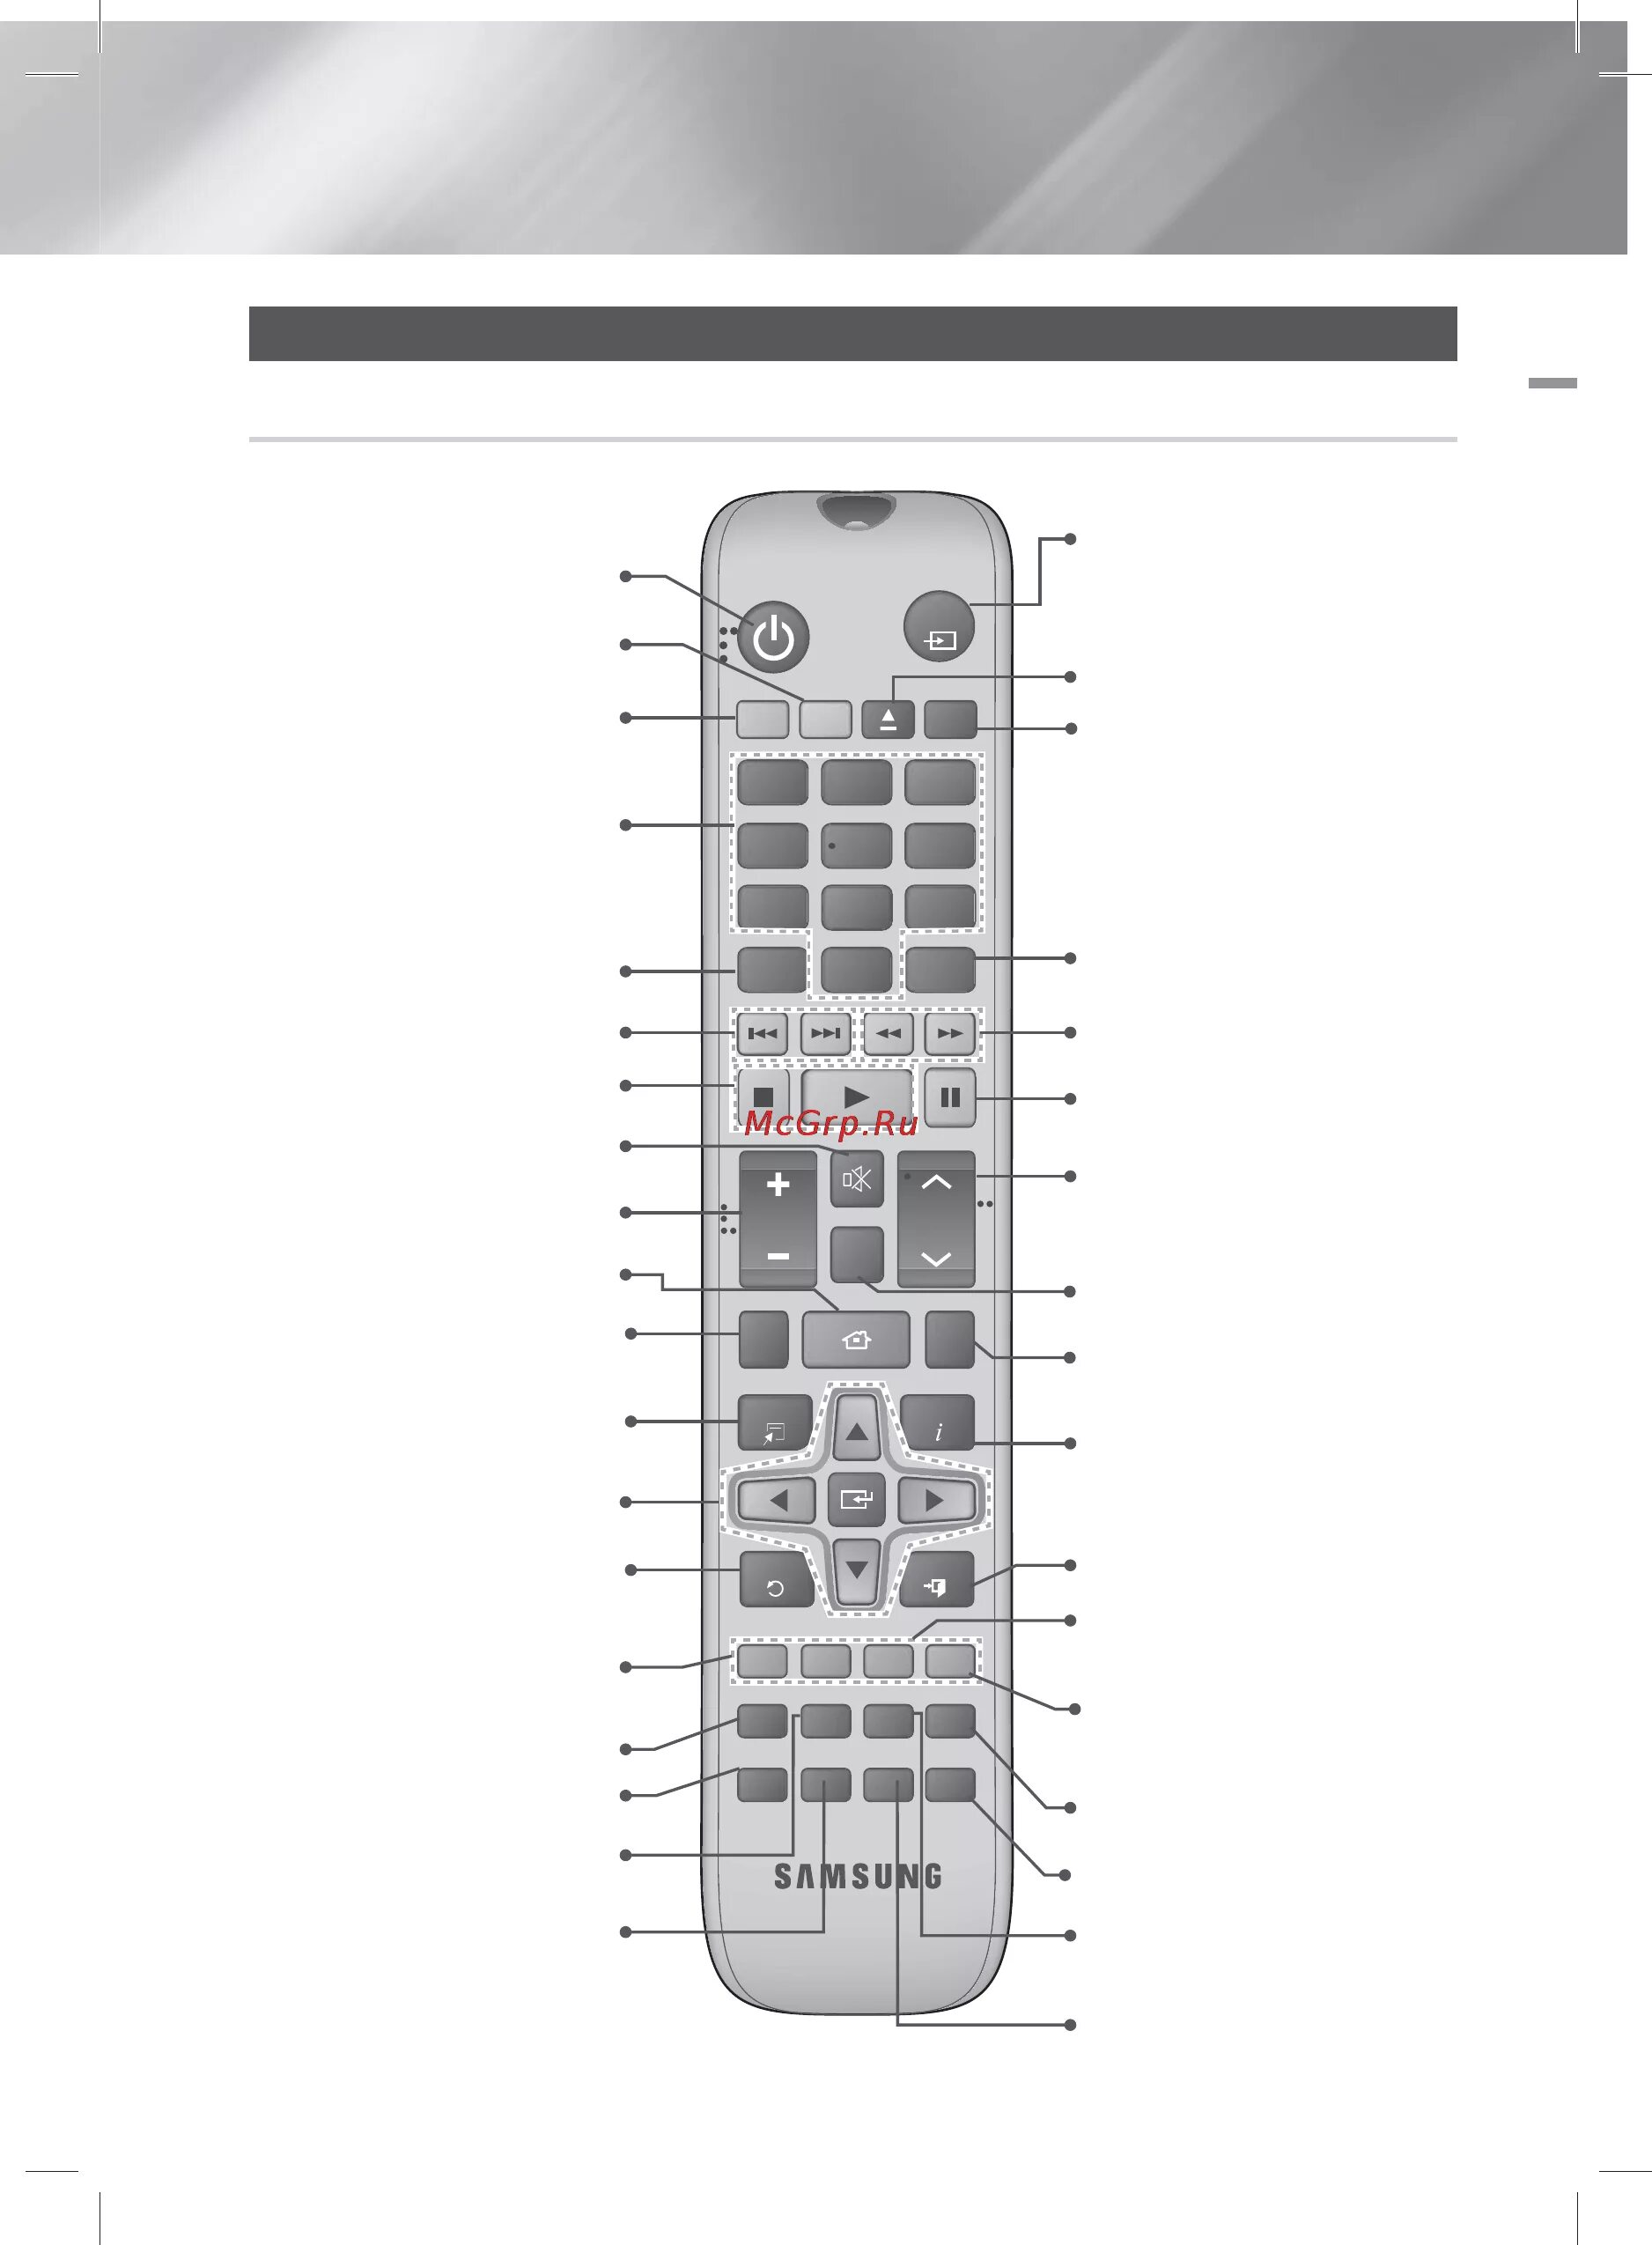 Назначение кнопок на пульте телевизора самсунг. Пульт для кинотеатра самсунг f5500k. DVD e360k Samsung пульт. Пульт для самсунга телевизора описание кнопок самсунг.